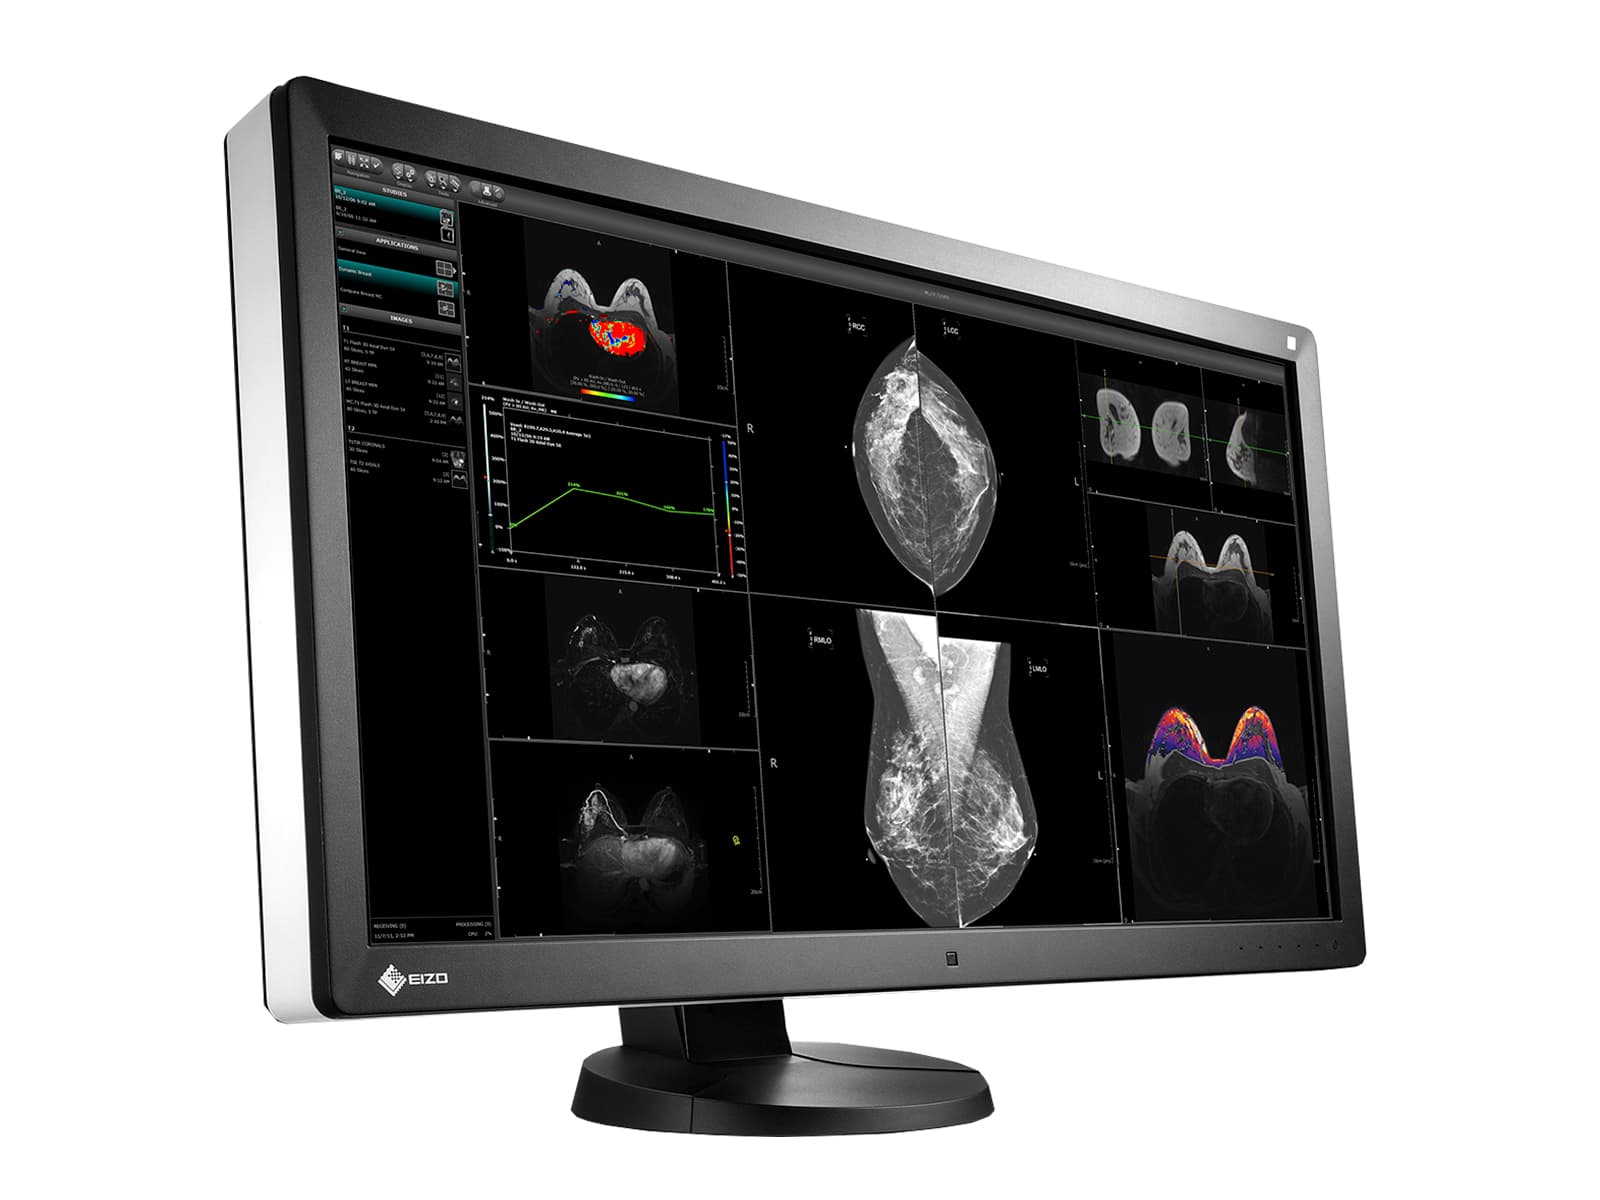 Eizo RadiForce RX850 Fusion Color LED Mammo 3D-DBT Breast Imaging Display (RX850-BK) Monitors.com 